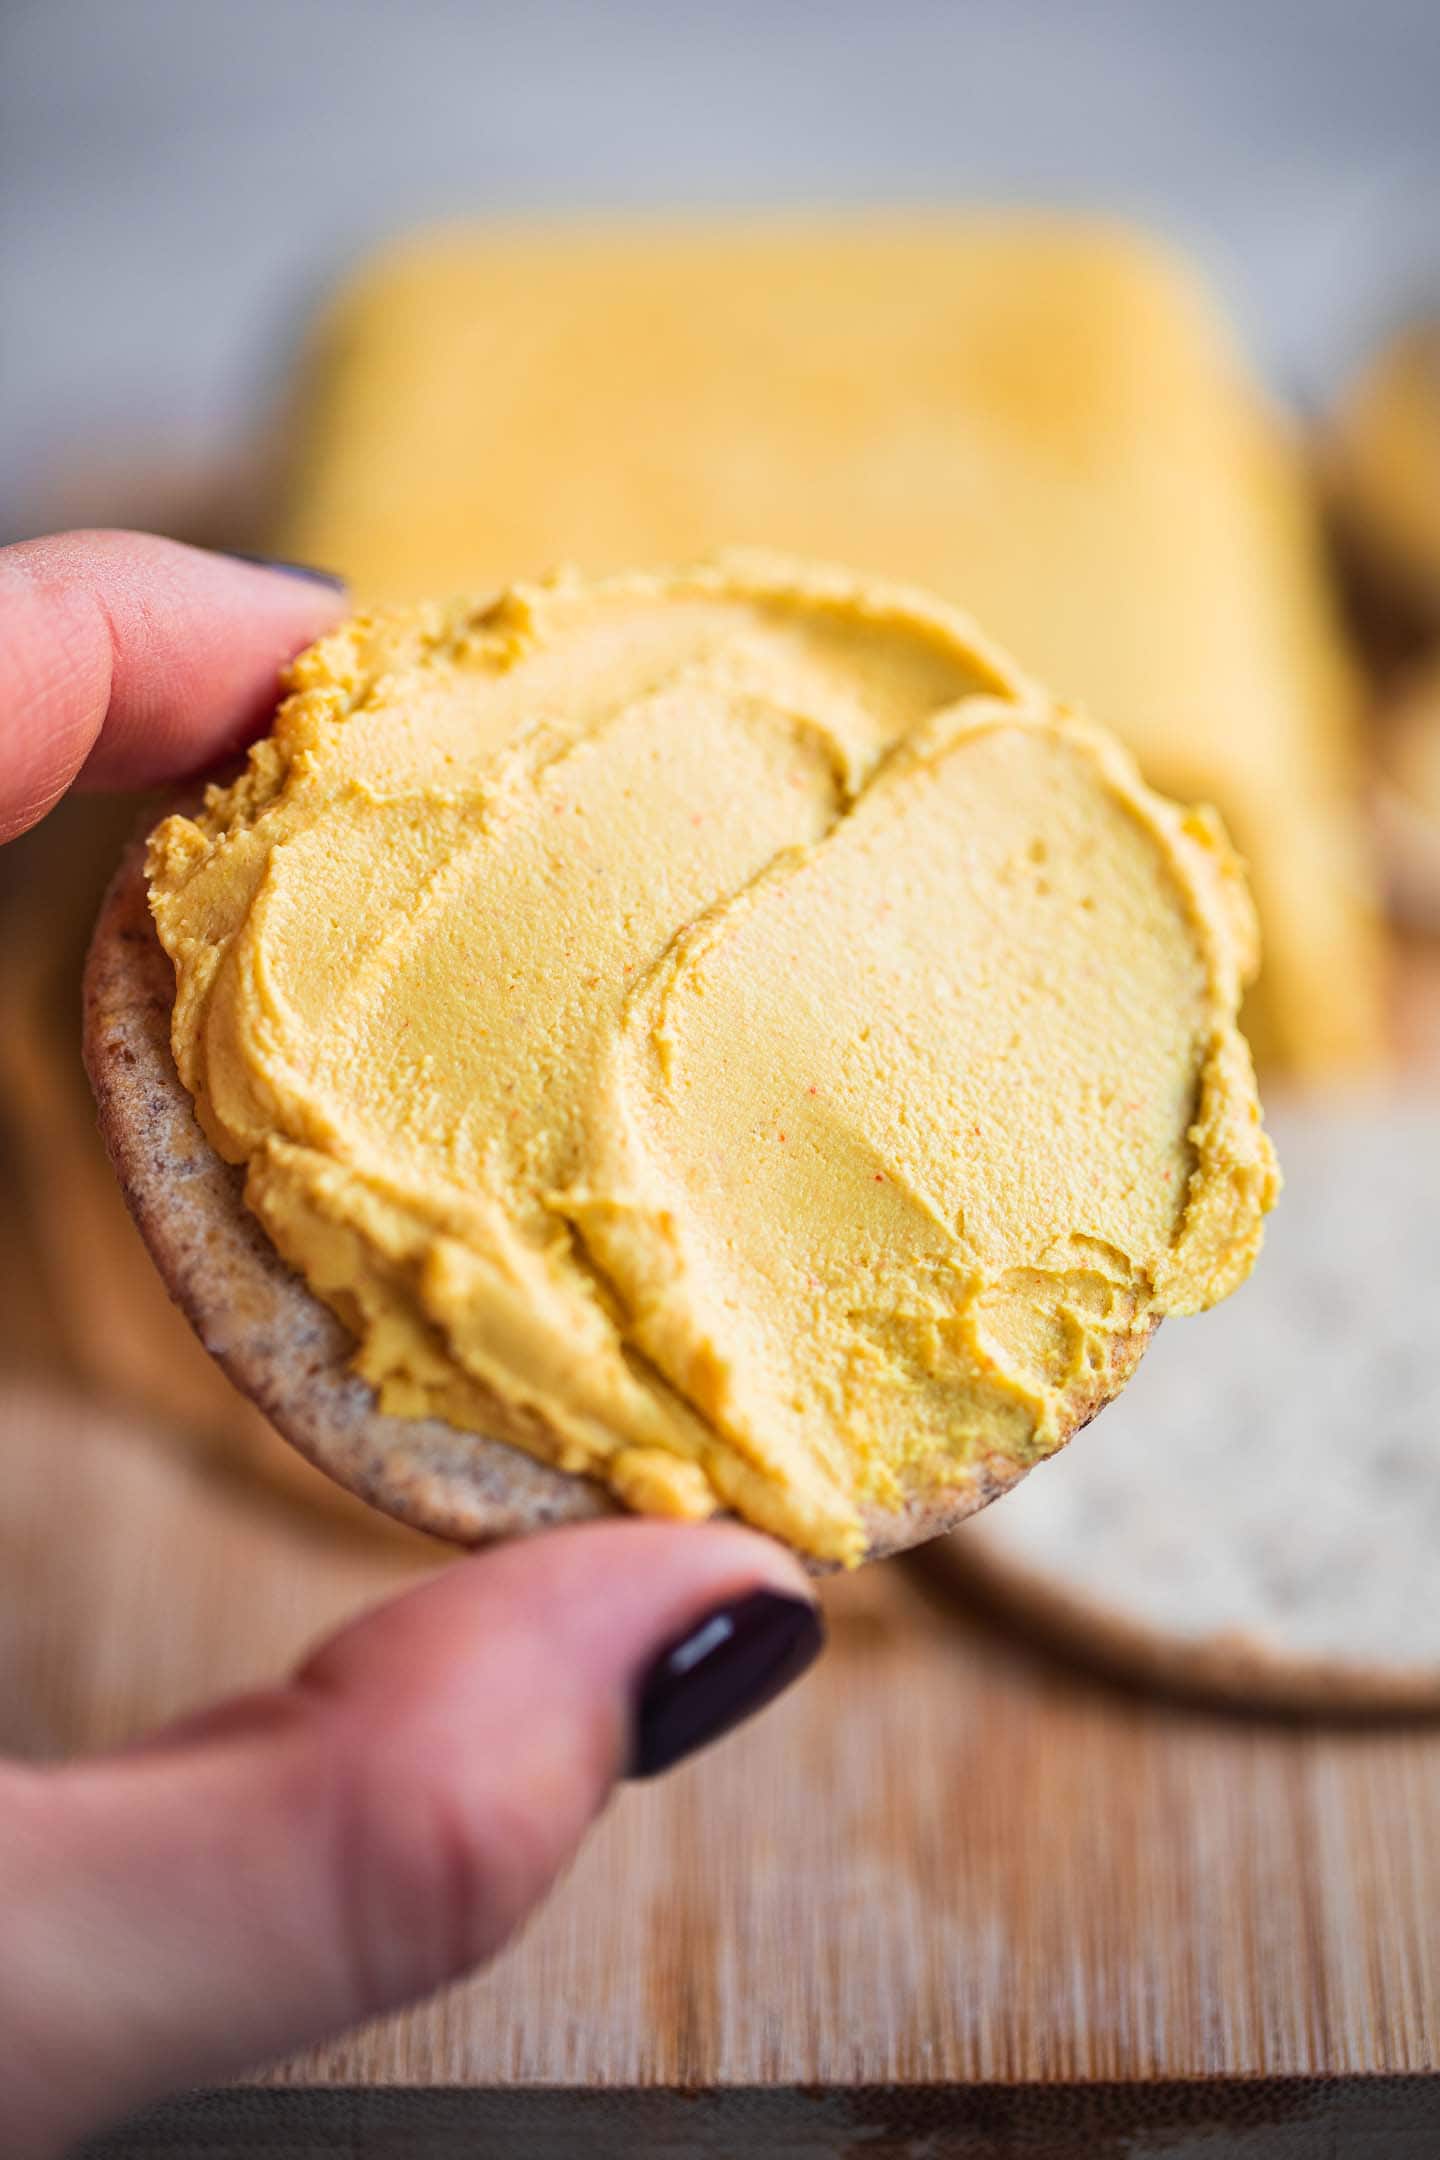 Cracker spread with vegan cheese